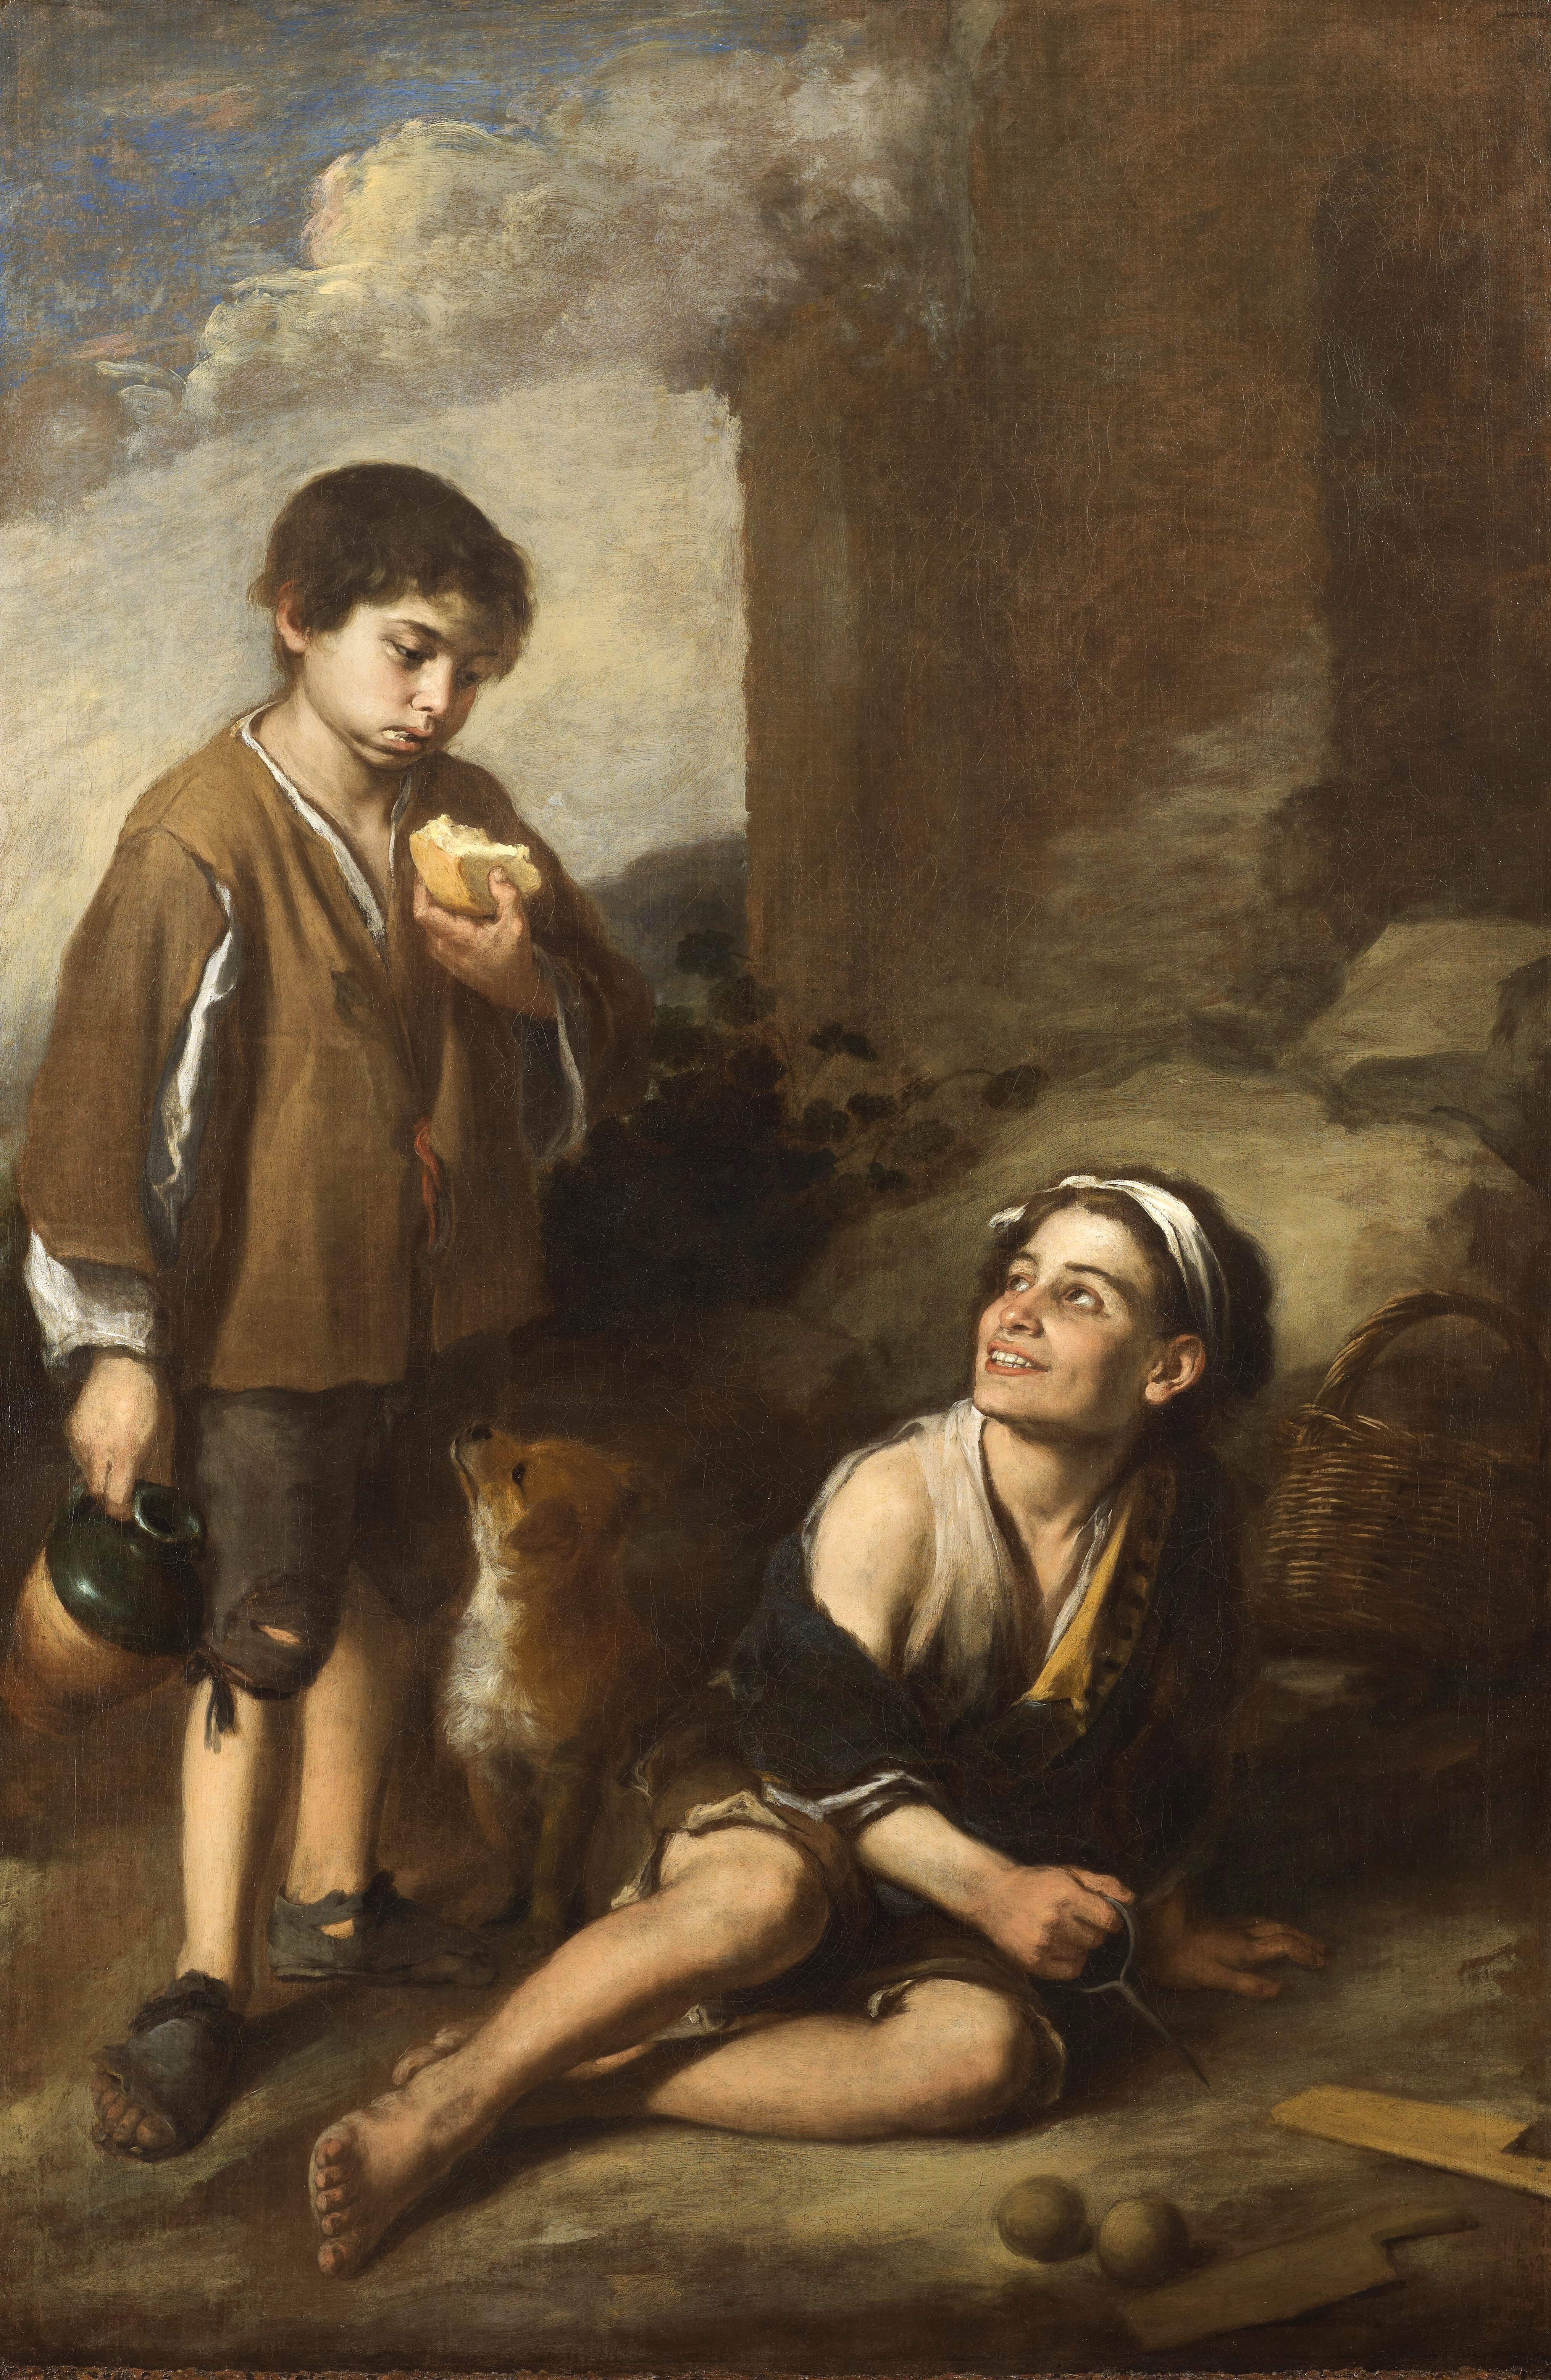 Мурильо мальчик с собакой. Бартоломе Мурильо. Эстебан Мурильо. Бартоломео Эстебан Мурильо (1618—1682). Бартоломе Эстебан Мурильо картины.